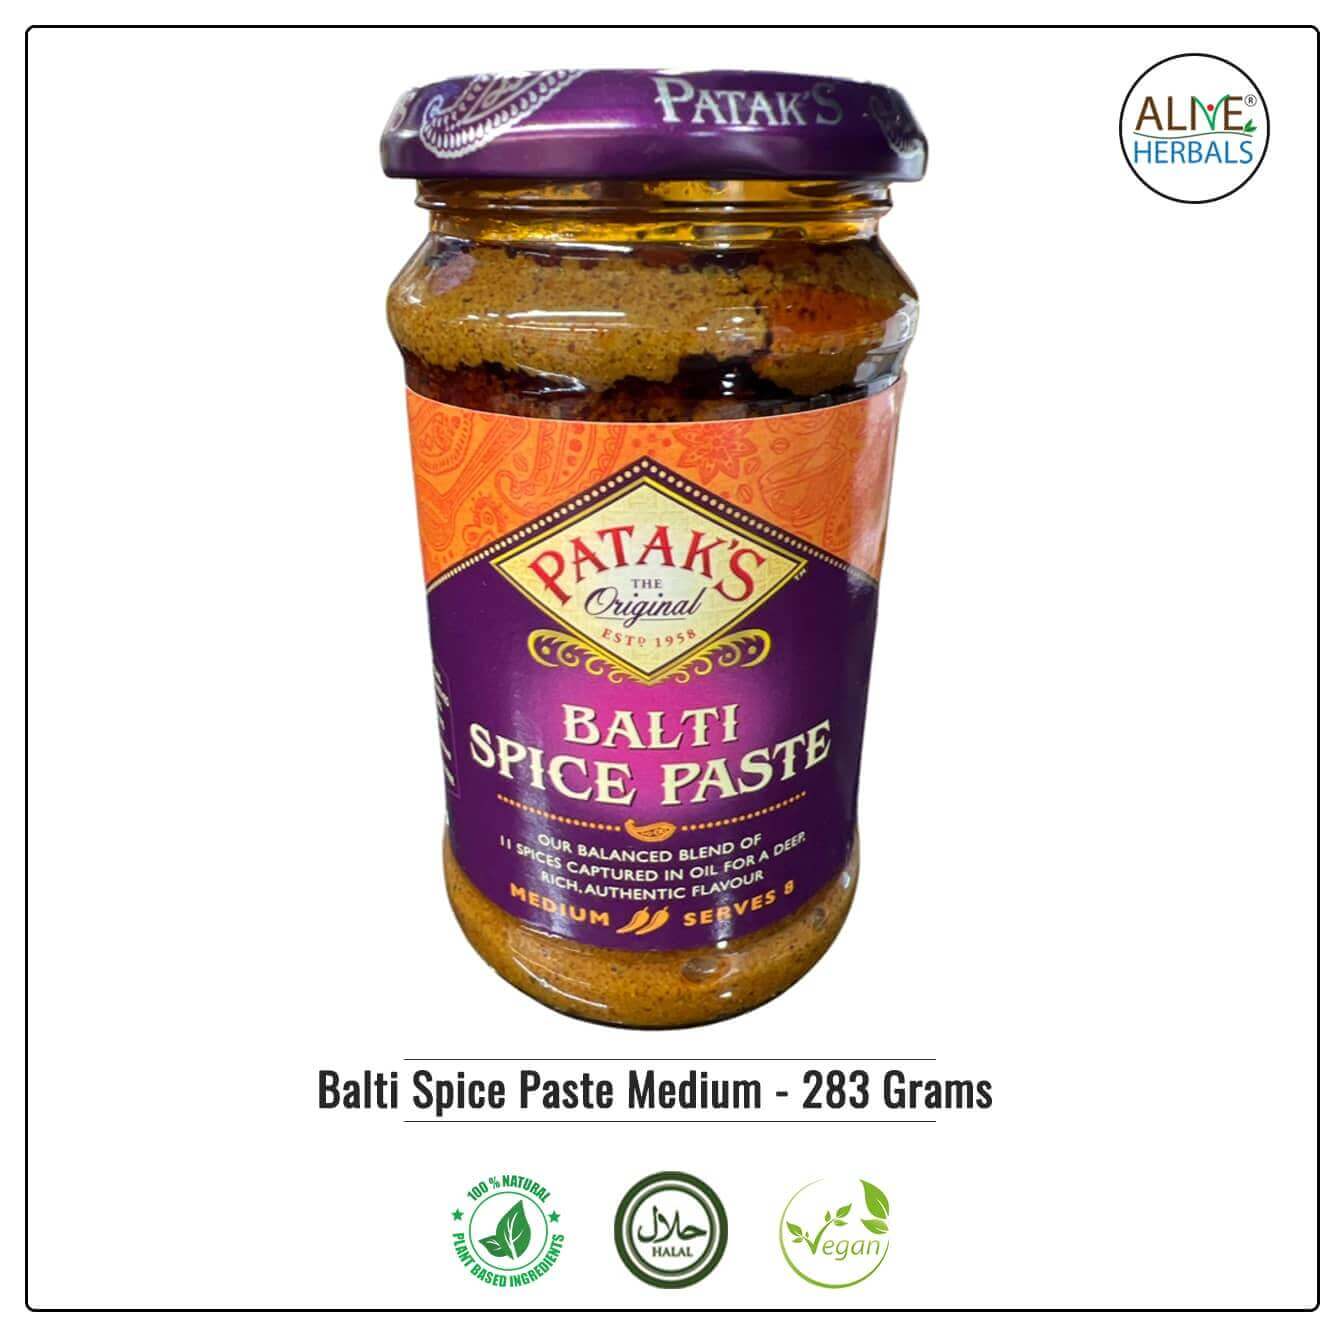 Balti Spice Paste Medium - Alive Herbals